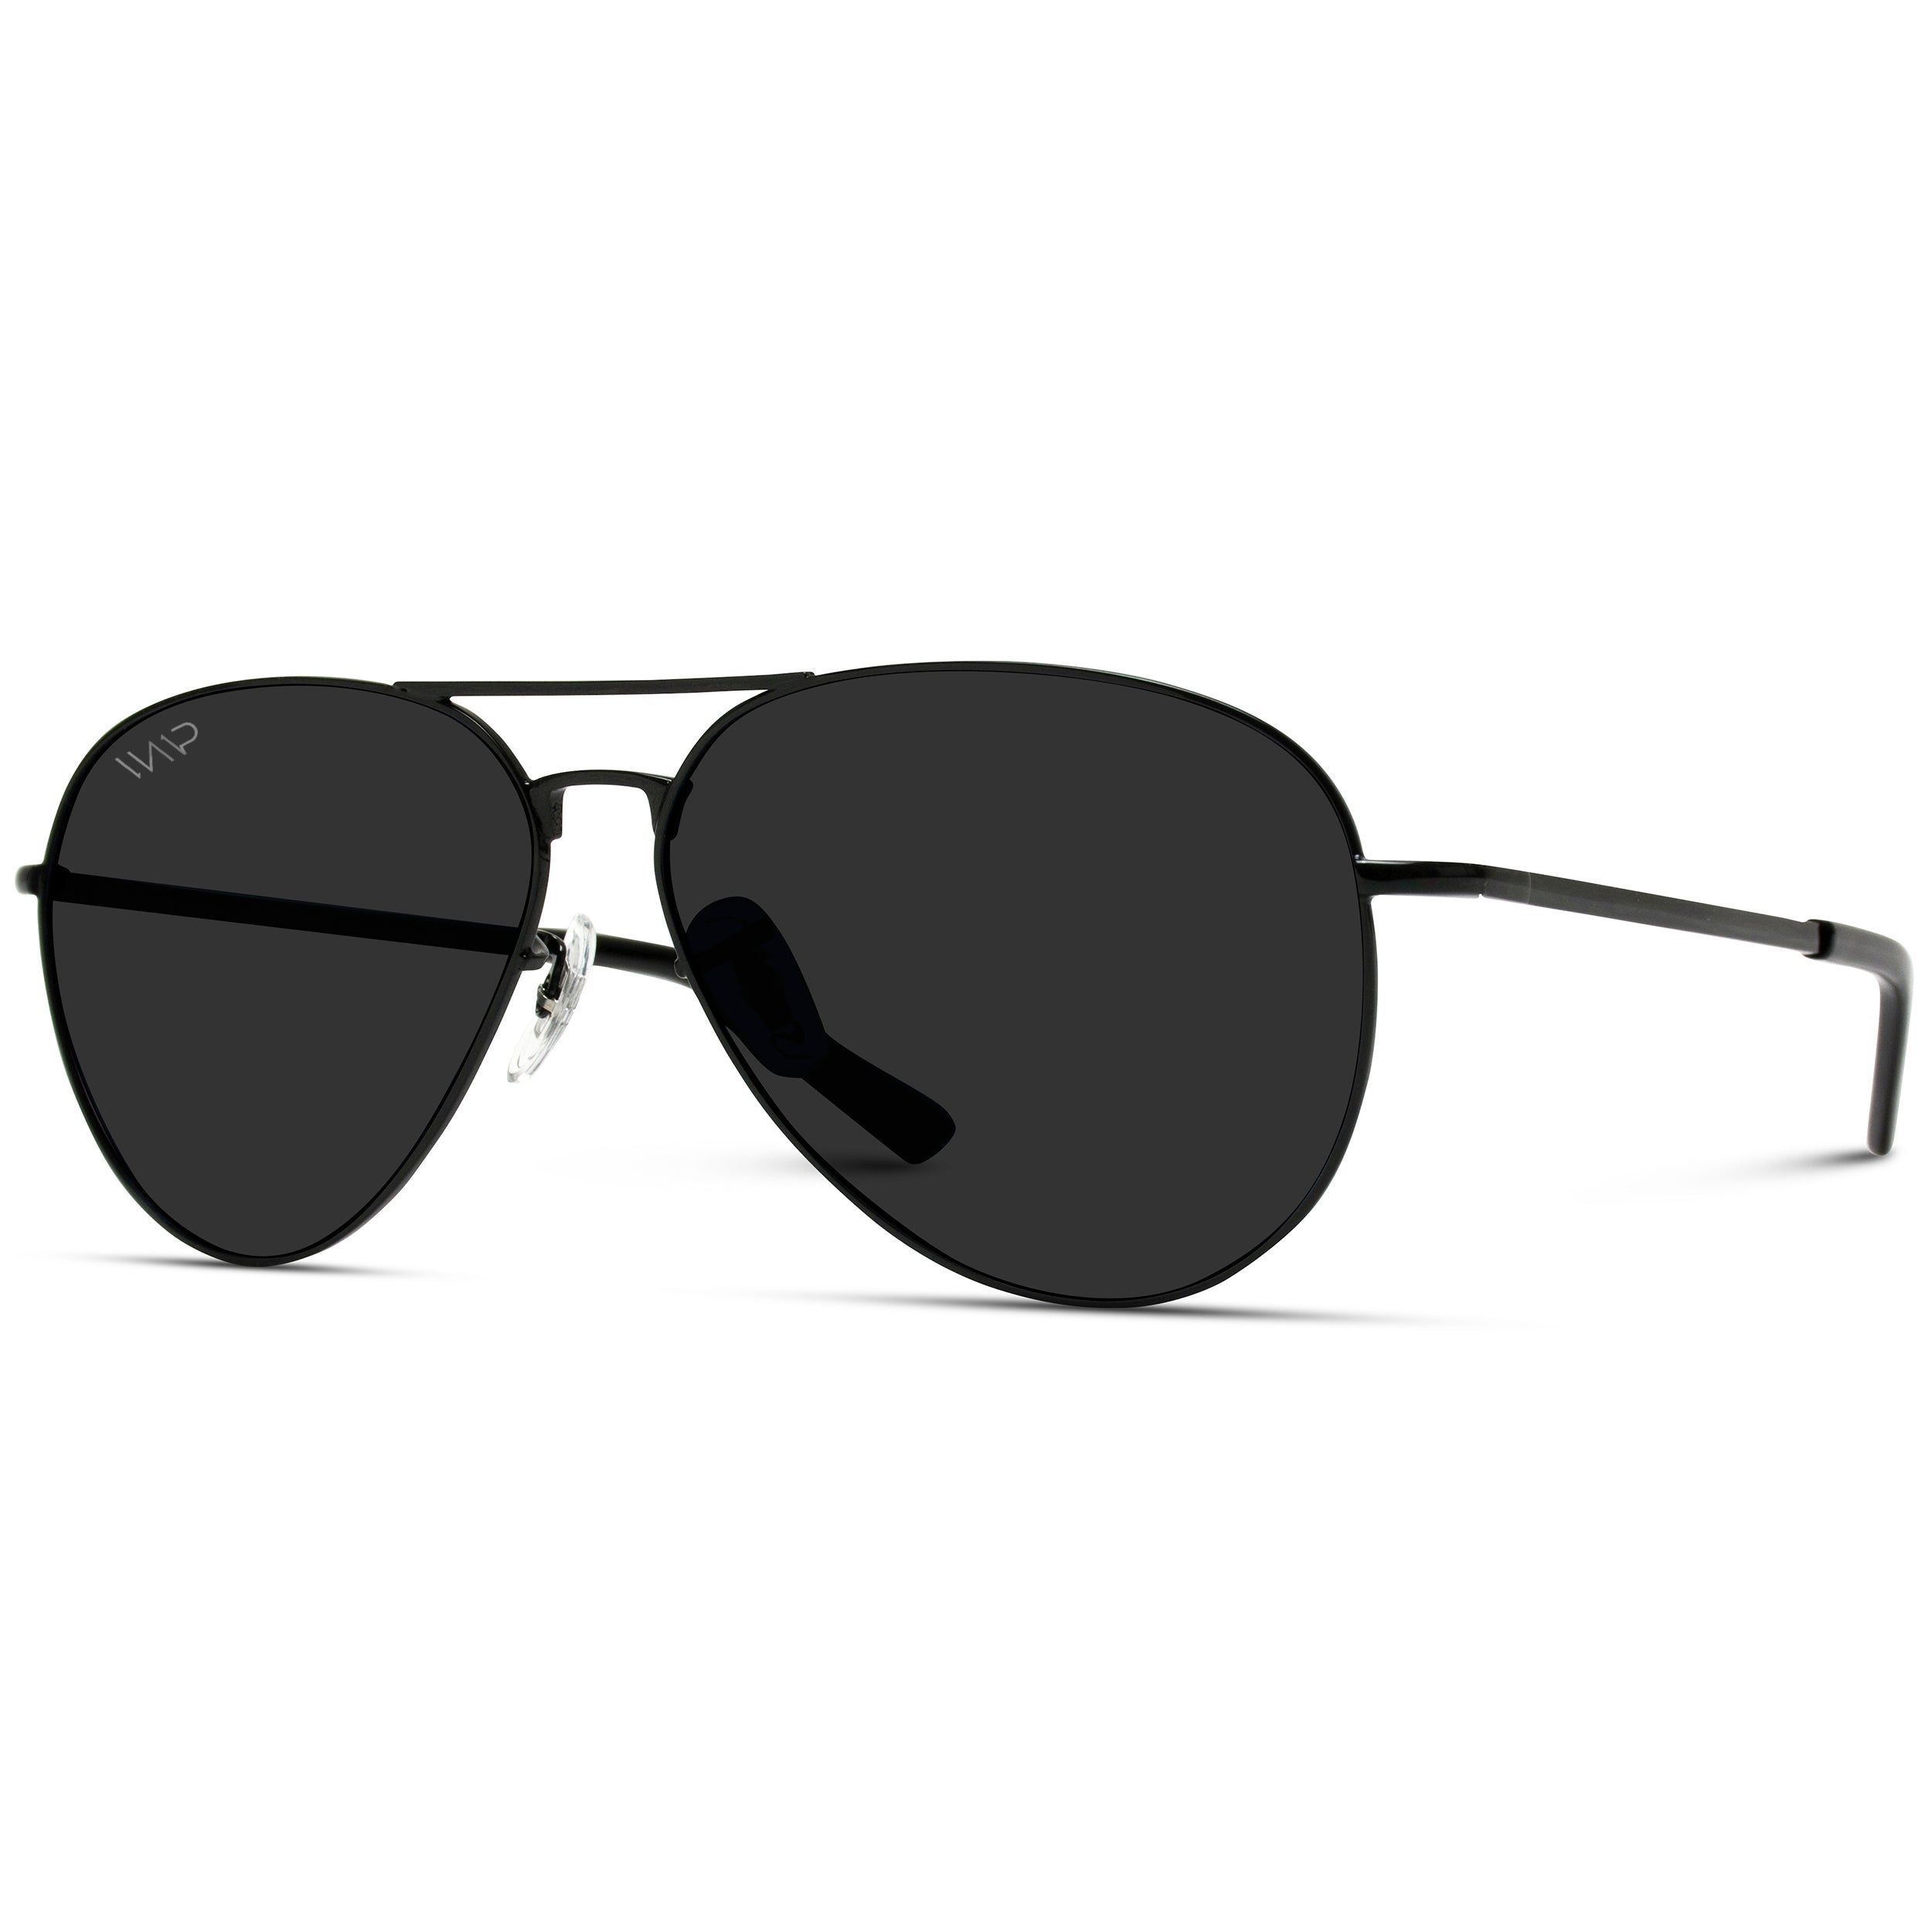 WearMe Pro - Classic Full Black Polarized Lens Metal Frame Men Aviator Style Sunglasses - image 2 of 6